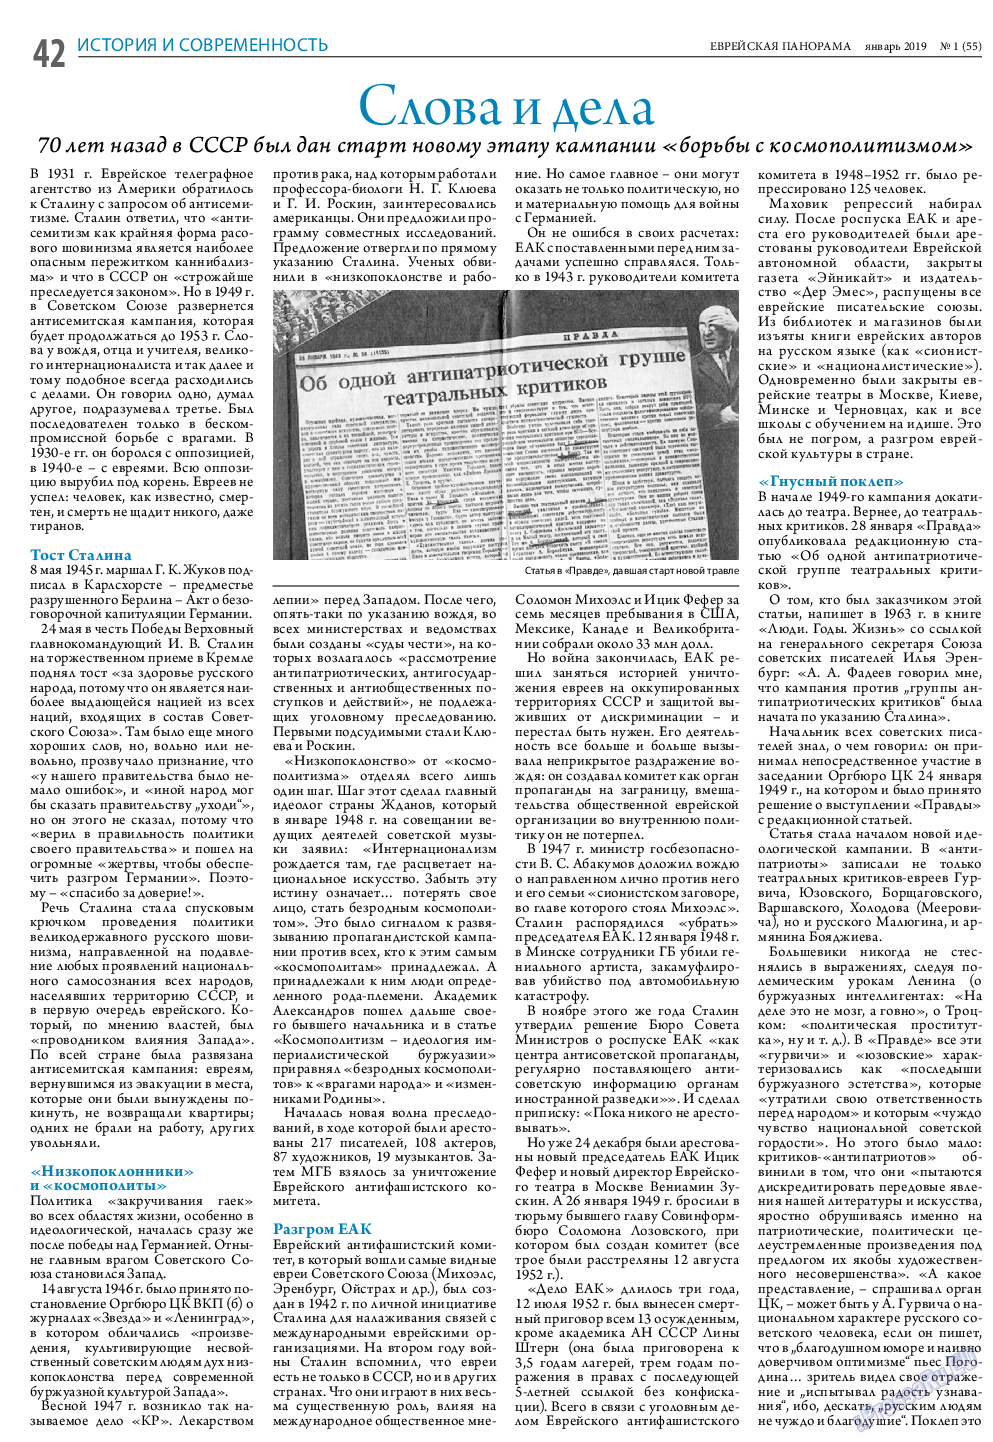 Еврейская панорама, газета. 2019 №1 стр.42